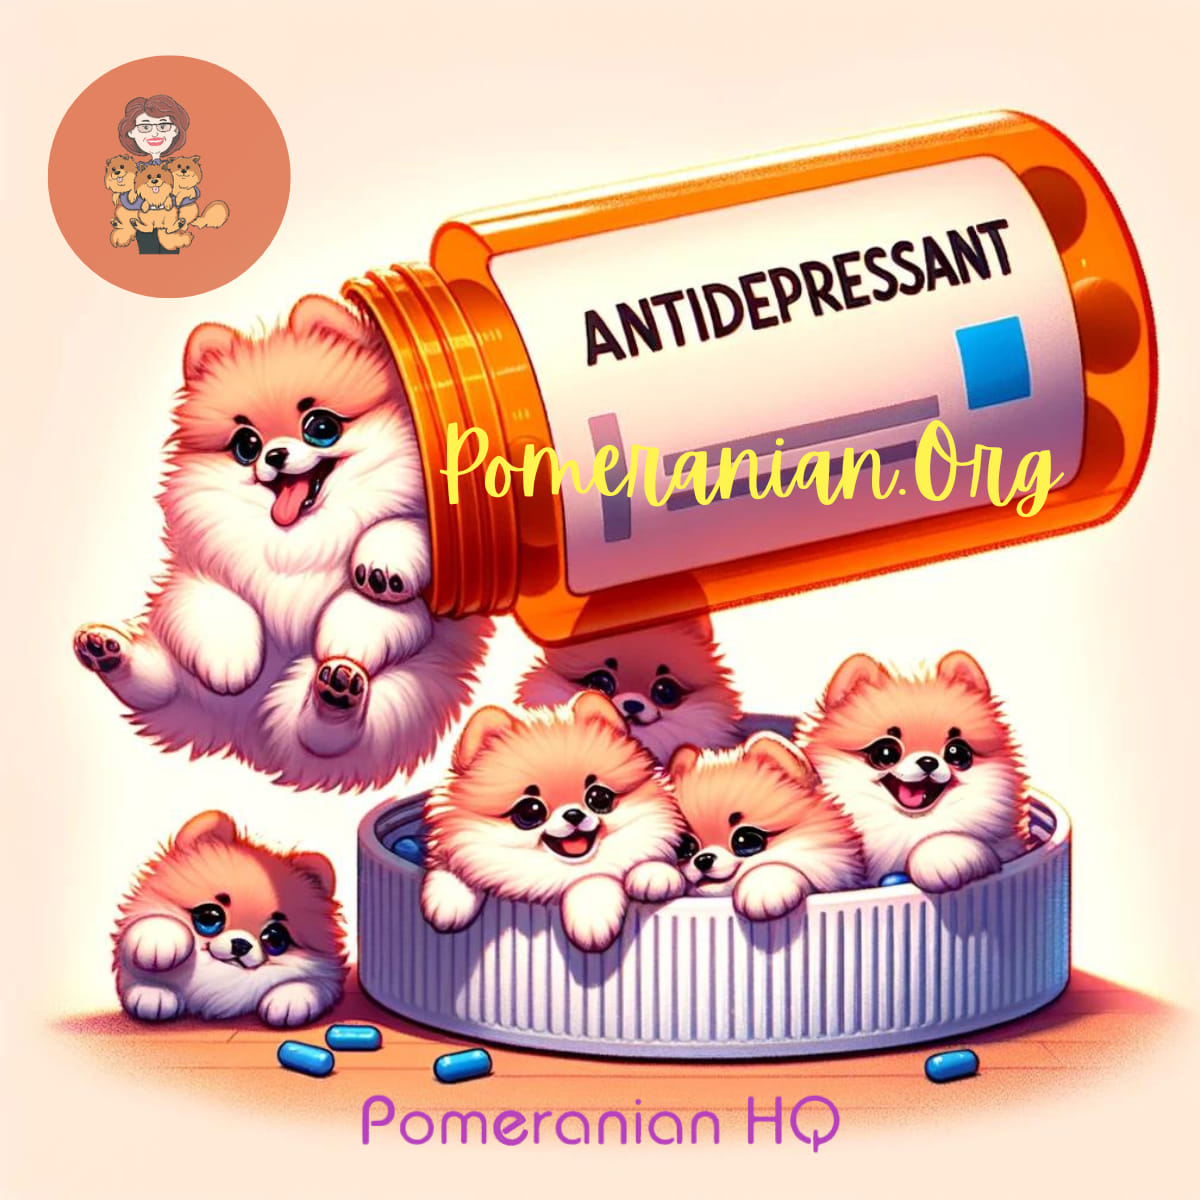 Antidepressant Pomeranians